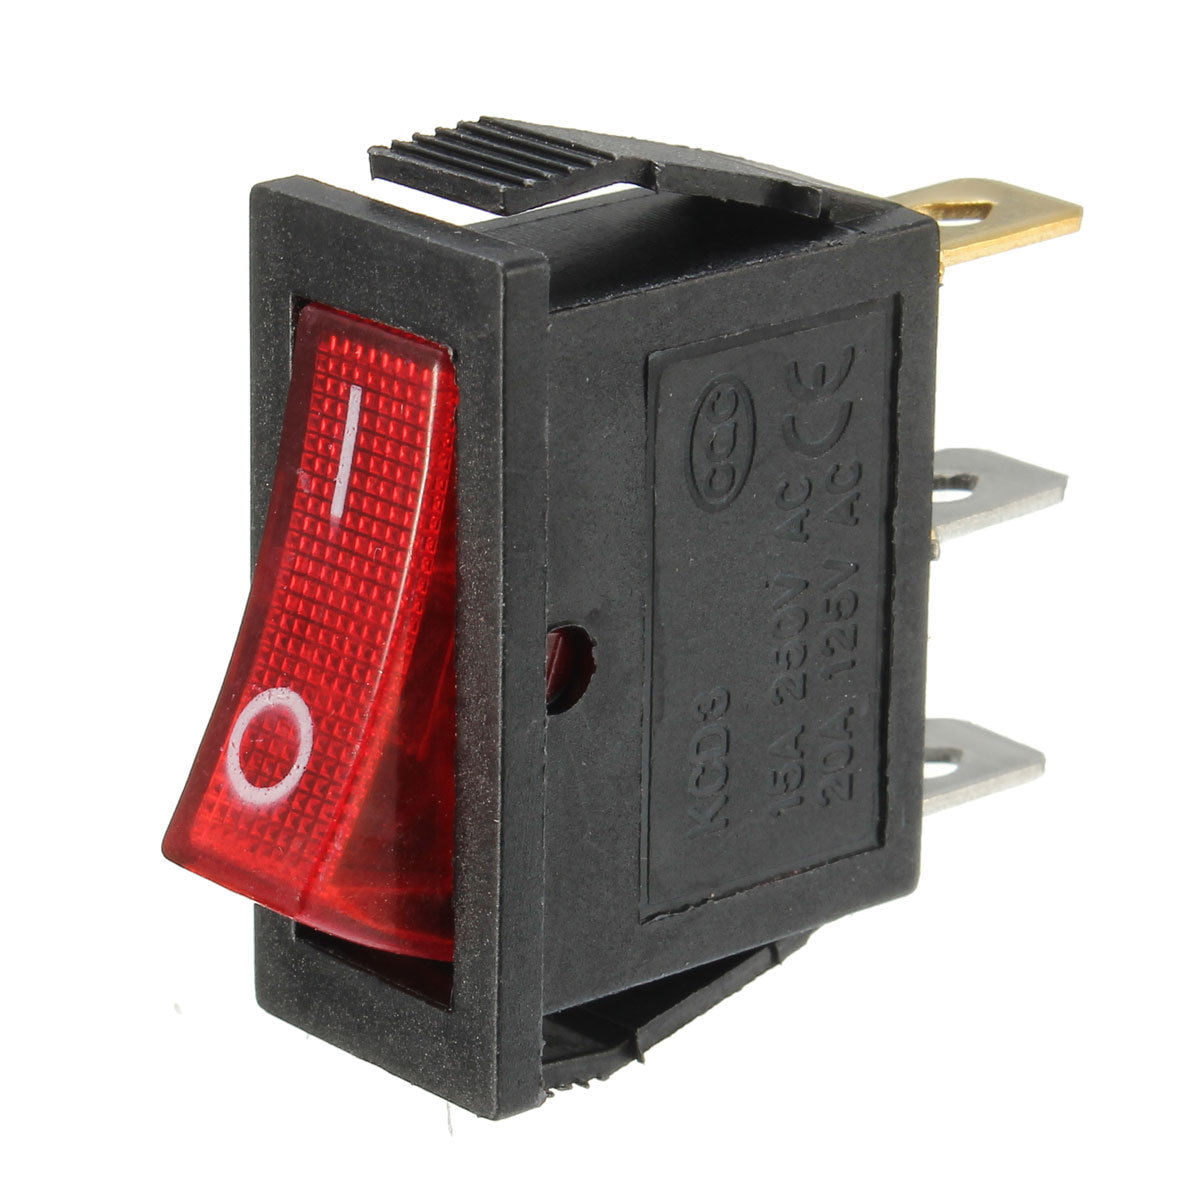 2X Red LED Light 3-Pin ON//Off 1//2 x 1 Rectangular Rocker Switch AC 15A//250V